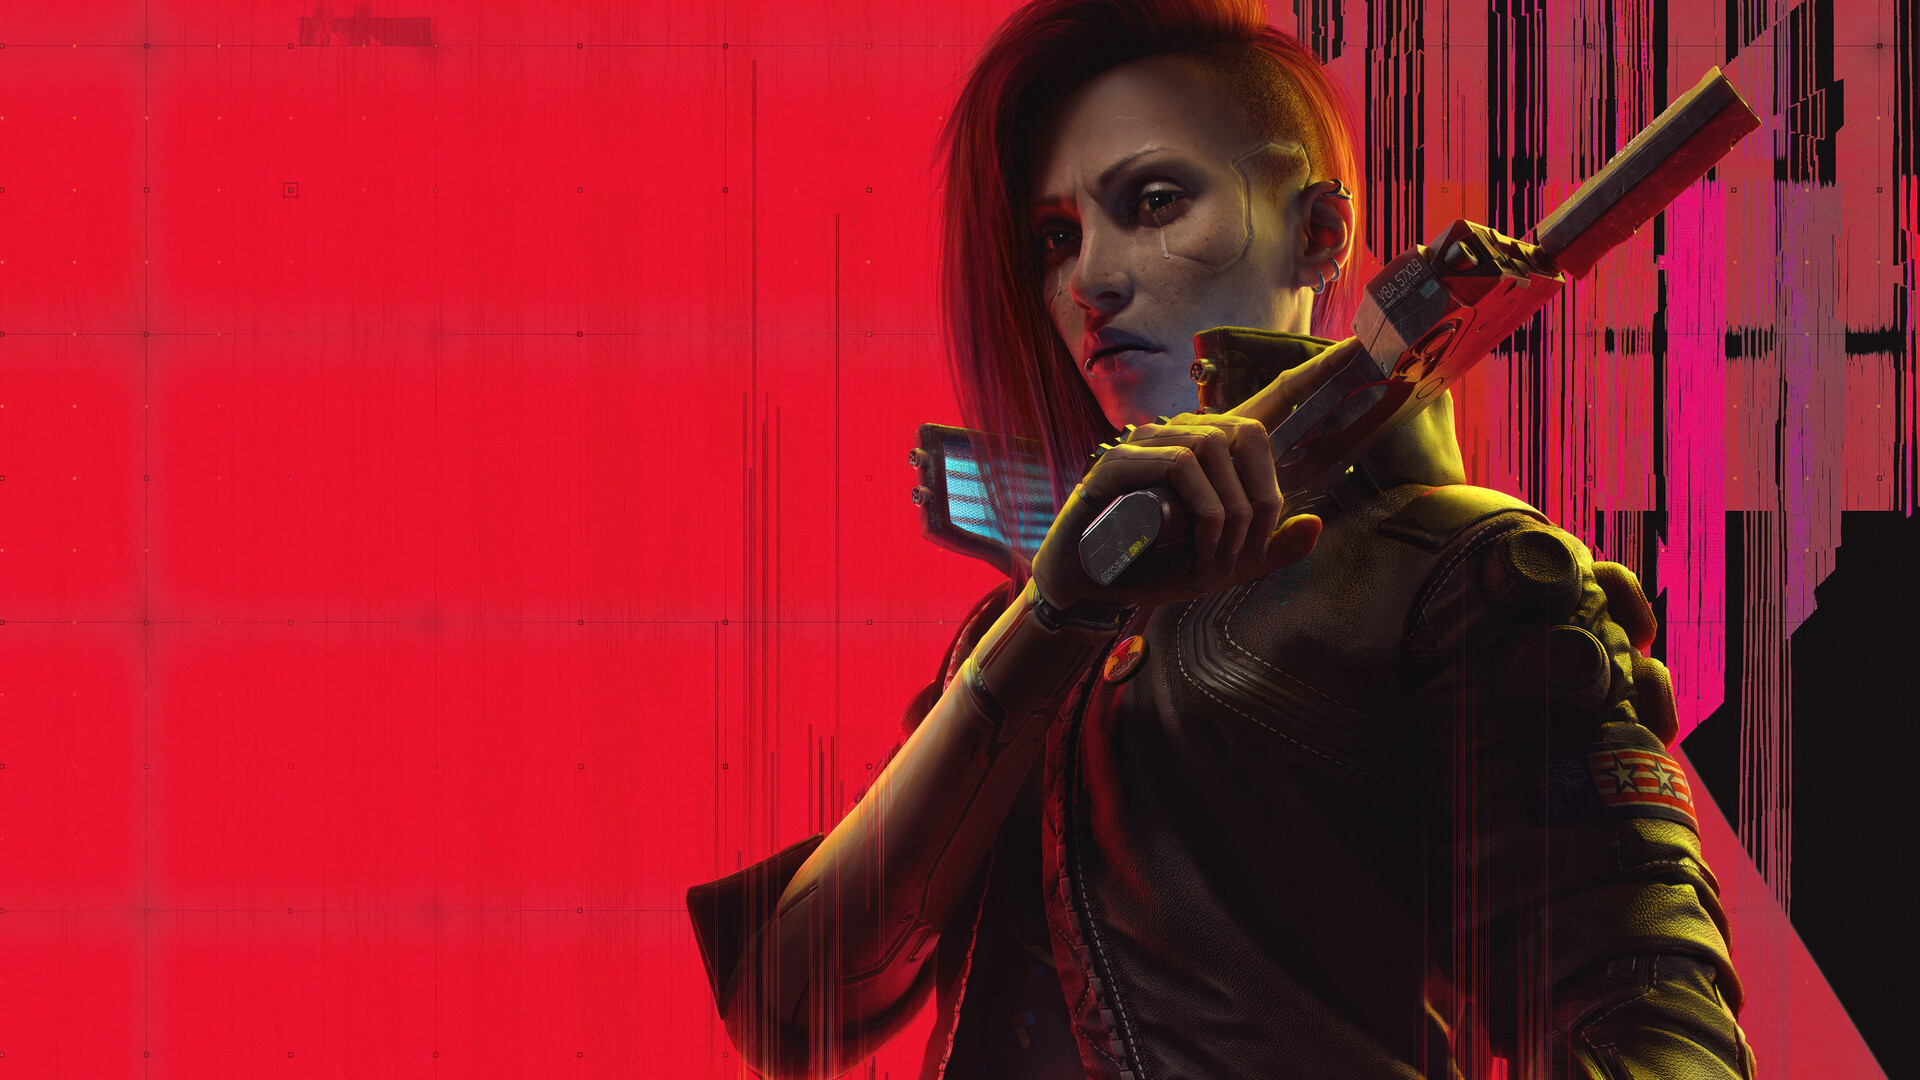 Cyberpunk 2077: Phantom Liberty is the Expansion Title